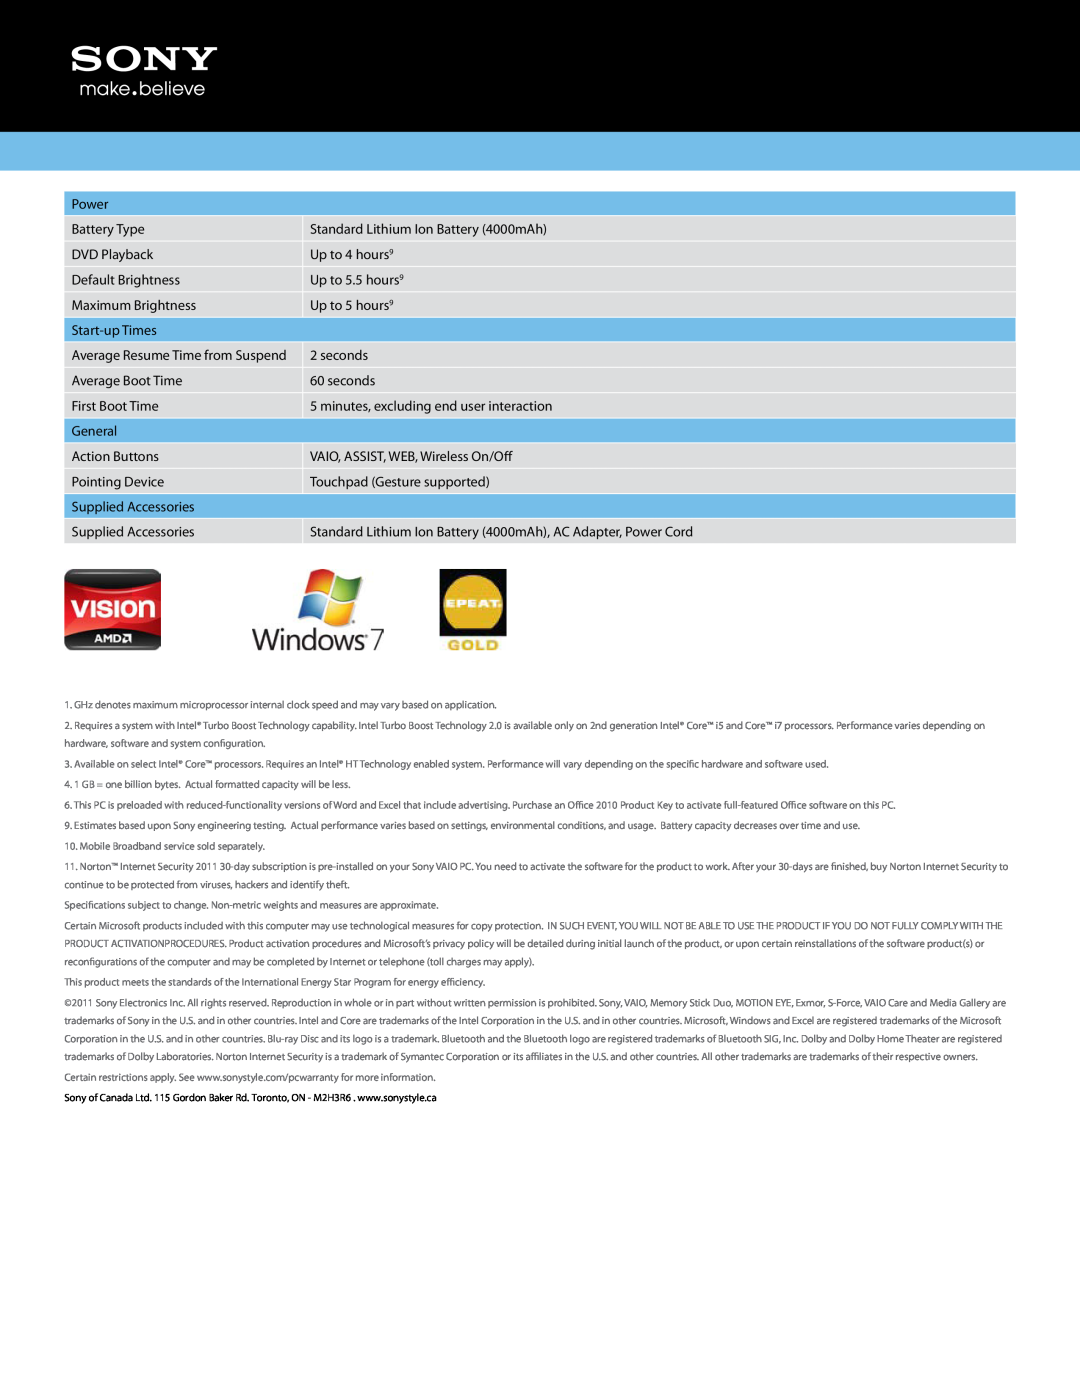 Sony VPCEL15FD/B manual Standard Lithium Ion Battery 4000mAh, AC Adapter, Power Cord 